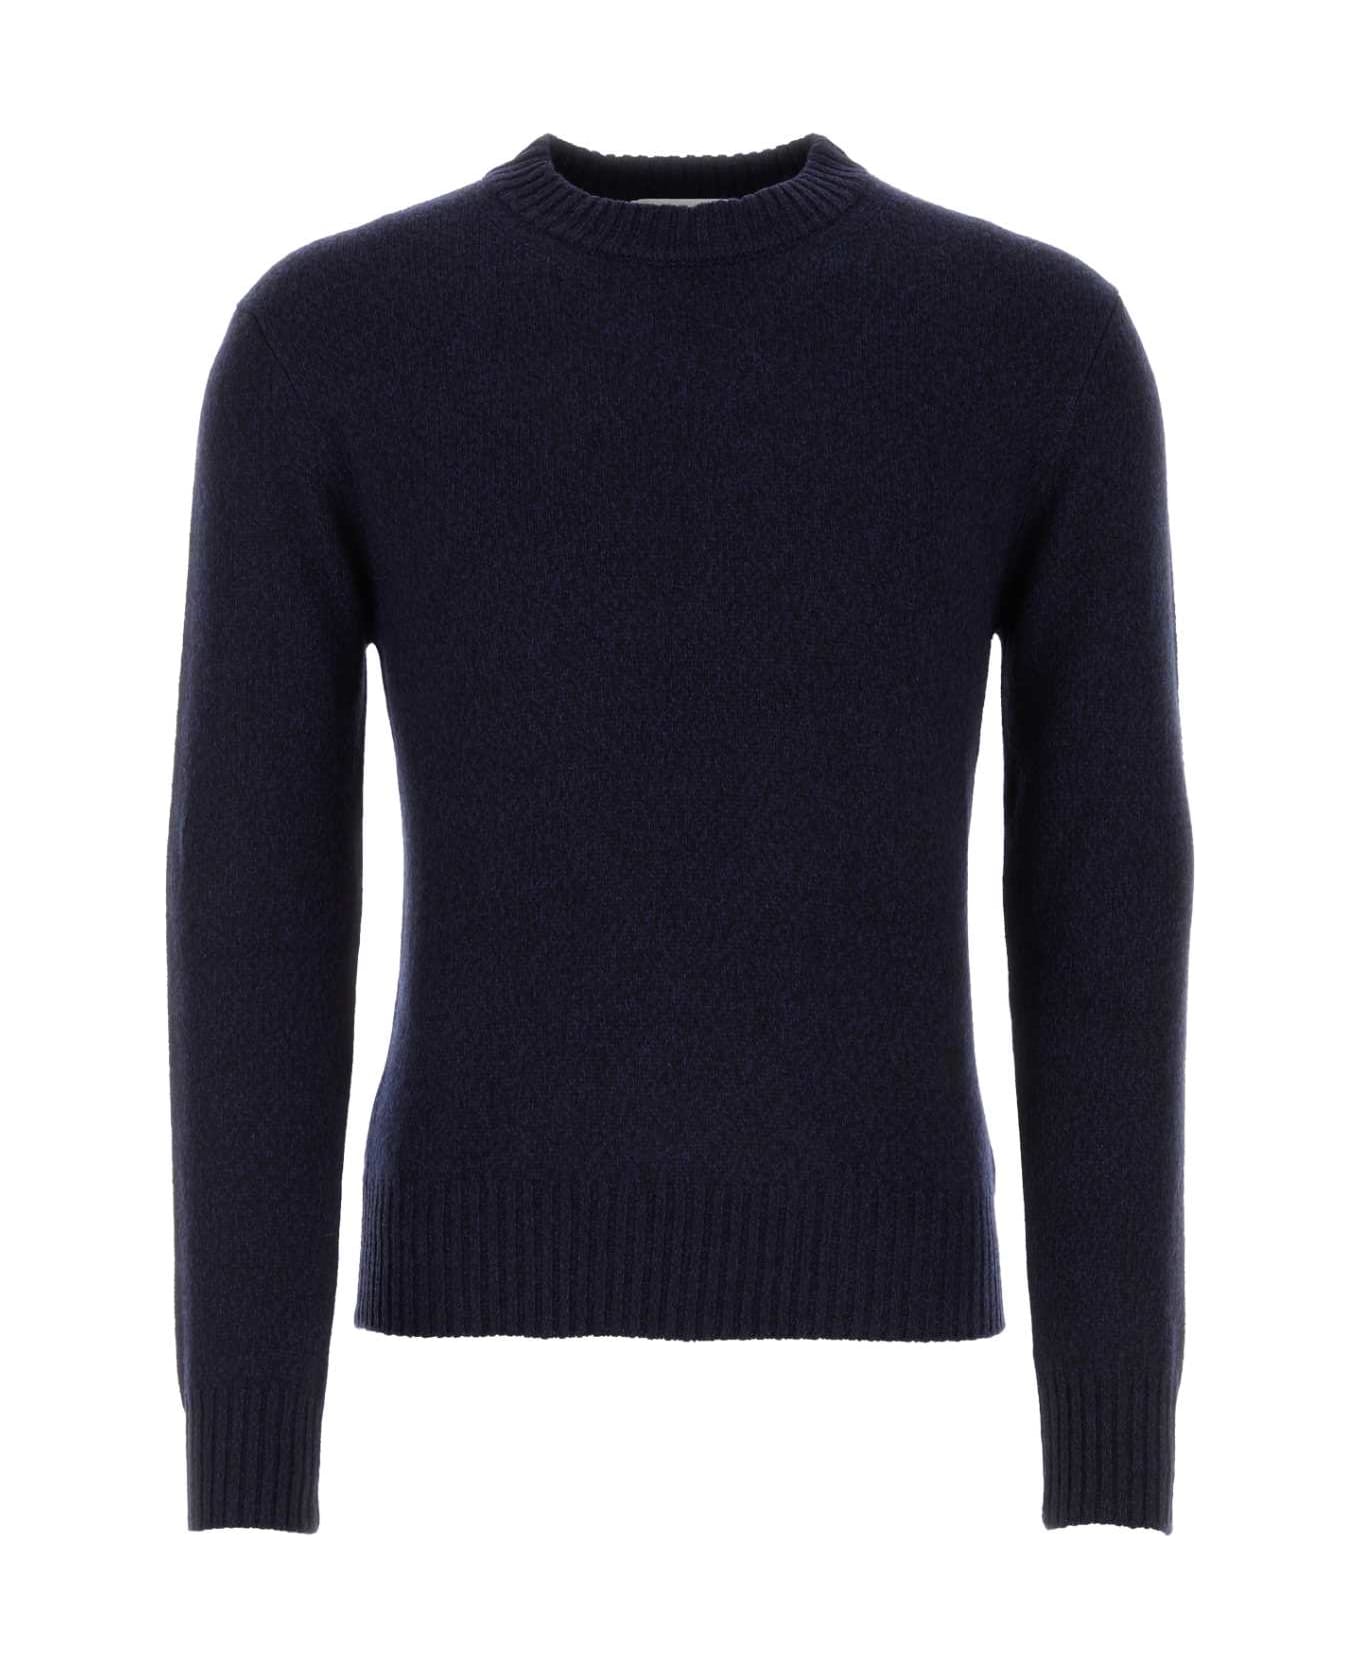 Ami Alexandre Mattiussi Melange Blue Cashmere Blend Sweater - NIGHTBLUE